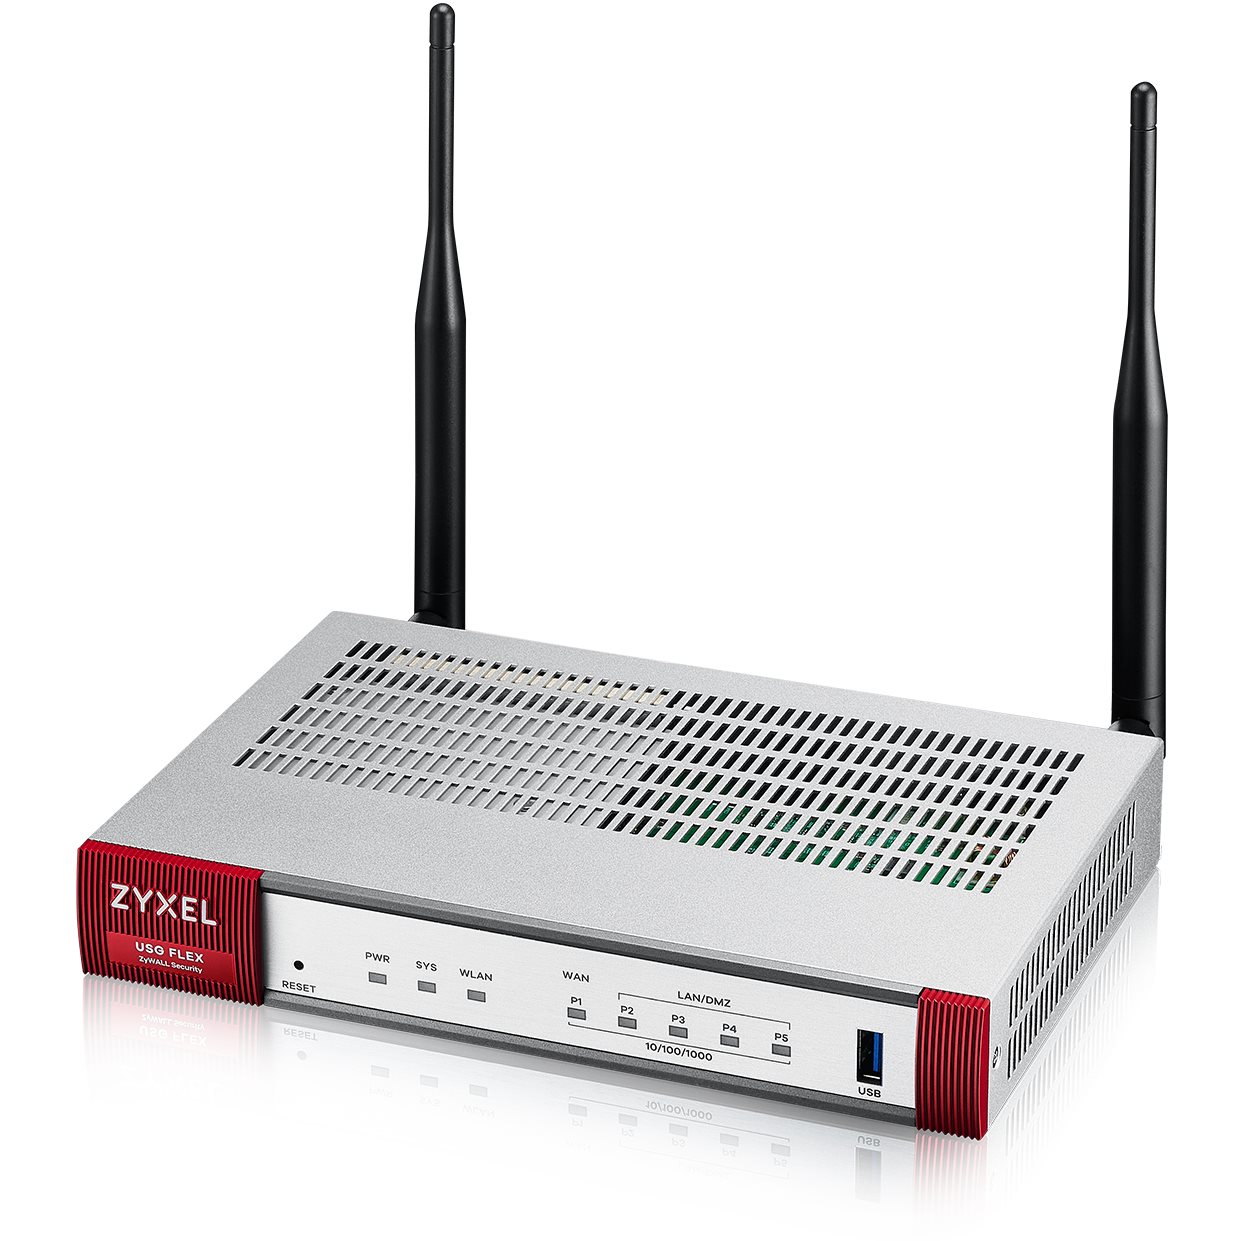   Routeurs  pro   Firewall Flex100 UTM  4 LAN +1 WAN +Wifi ax USGFLEX100AX-EU0102F